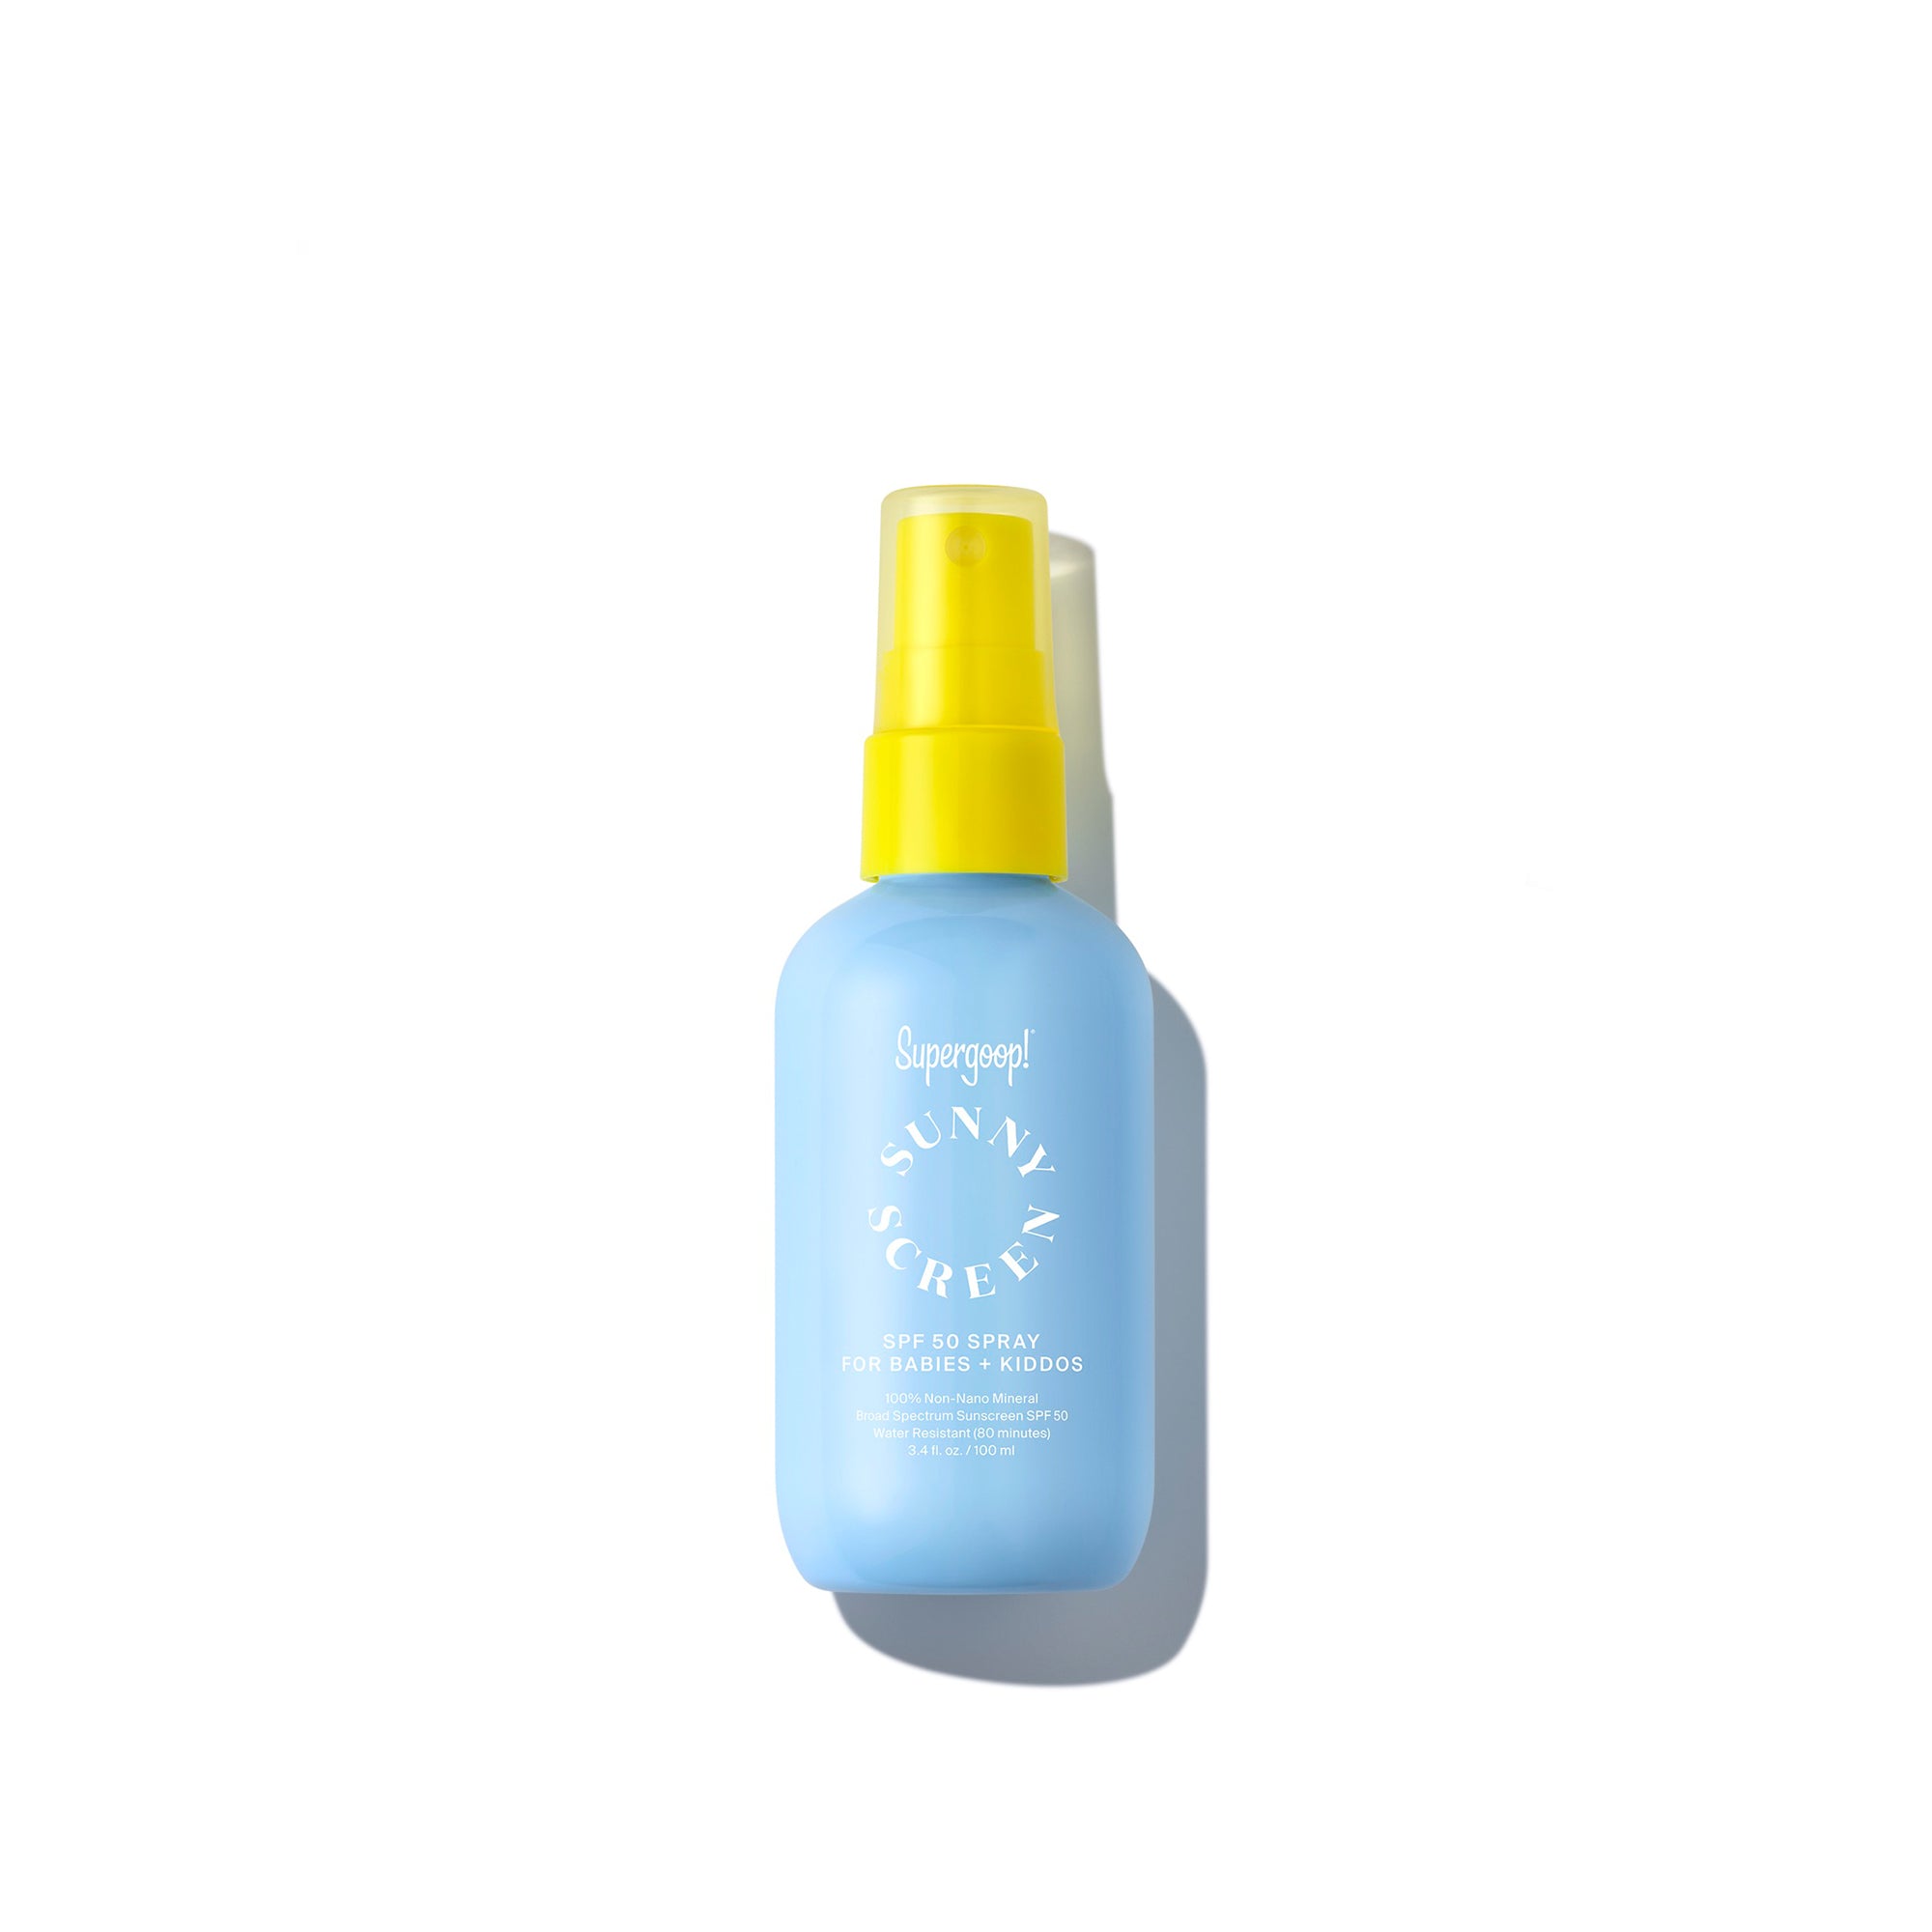 Sunnyscreen™ 100% Mineral Spray SPF 50